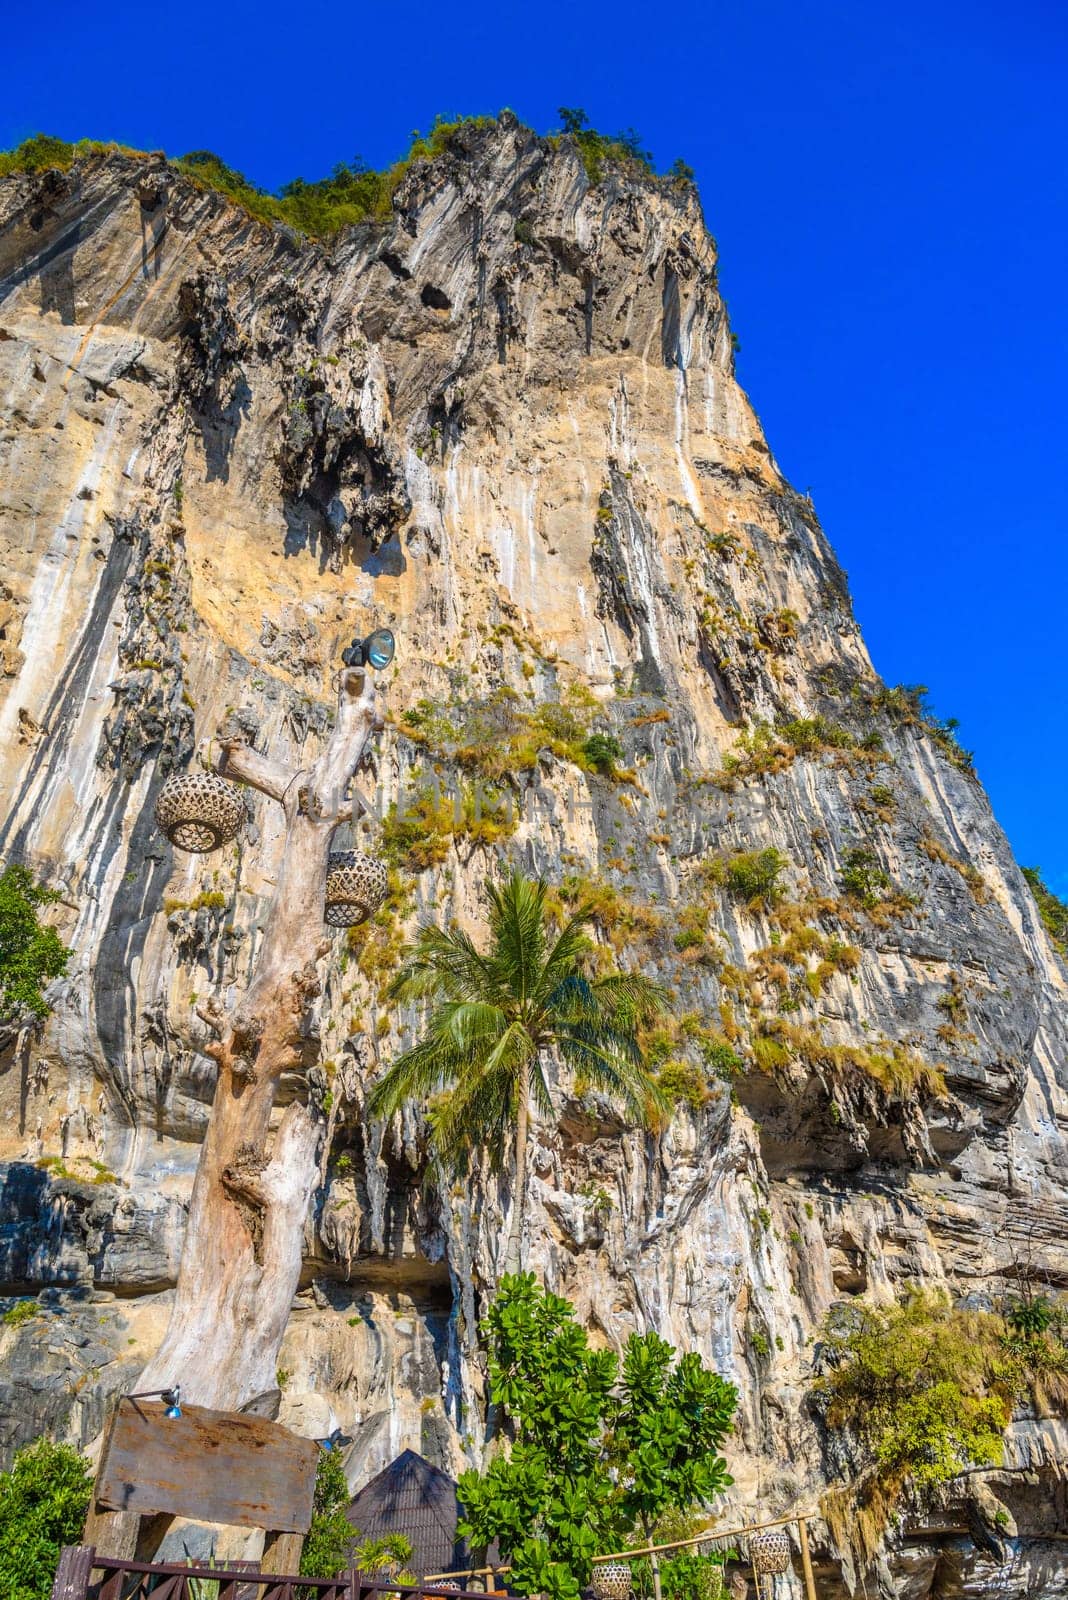 Rocks cliffs with palms on Tonsai Bay, Railay Beach, Ao Nang, Krabi, Thailand by Eagle2308